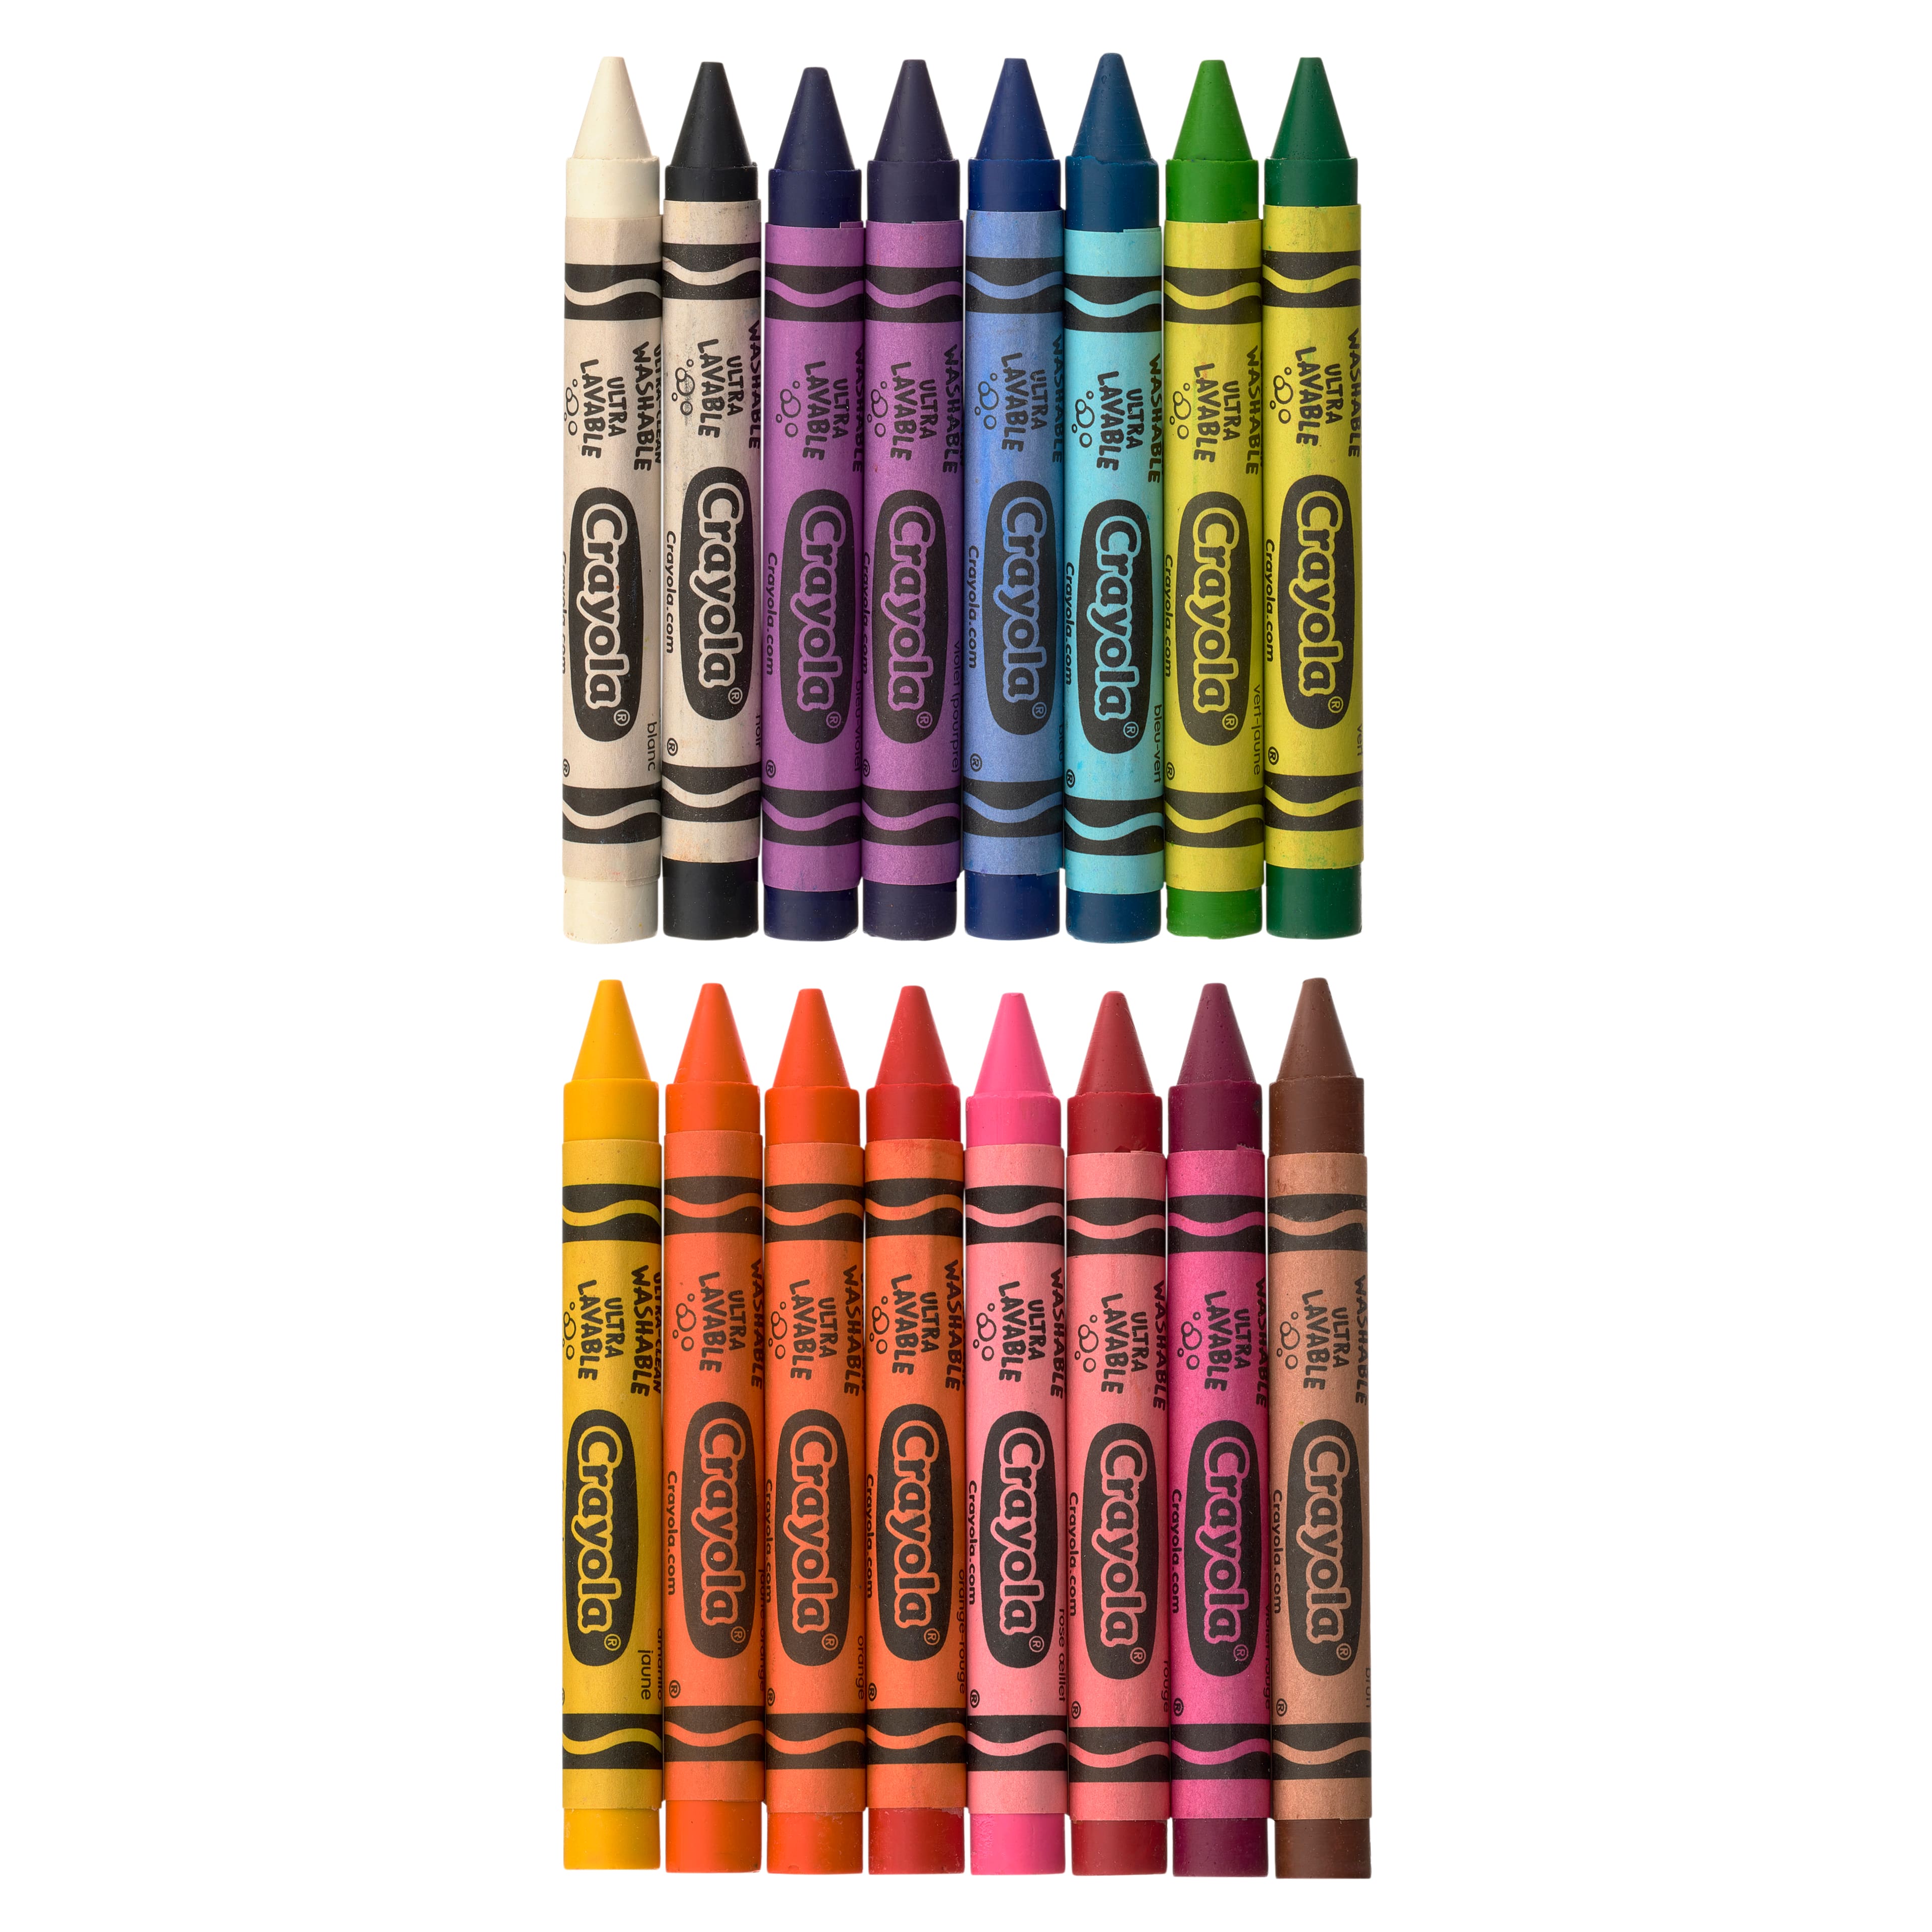 Crayola&#xAE; ColorMax&#x2122; Large Washable Crayons